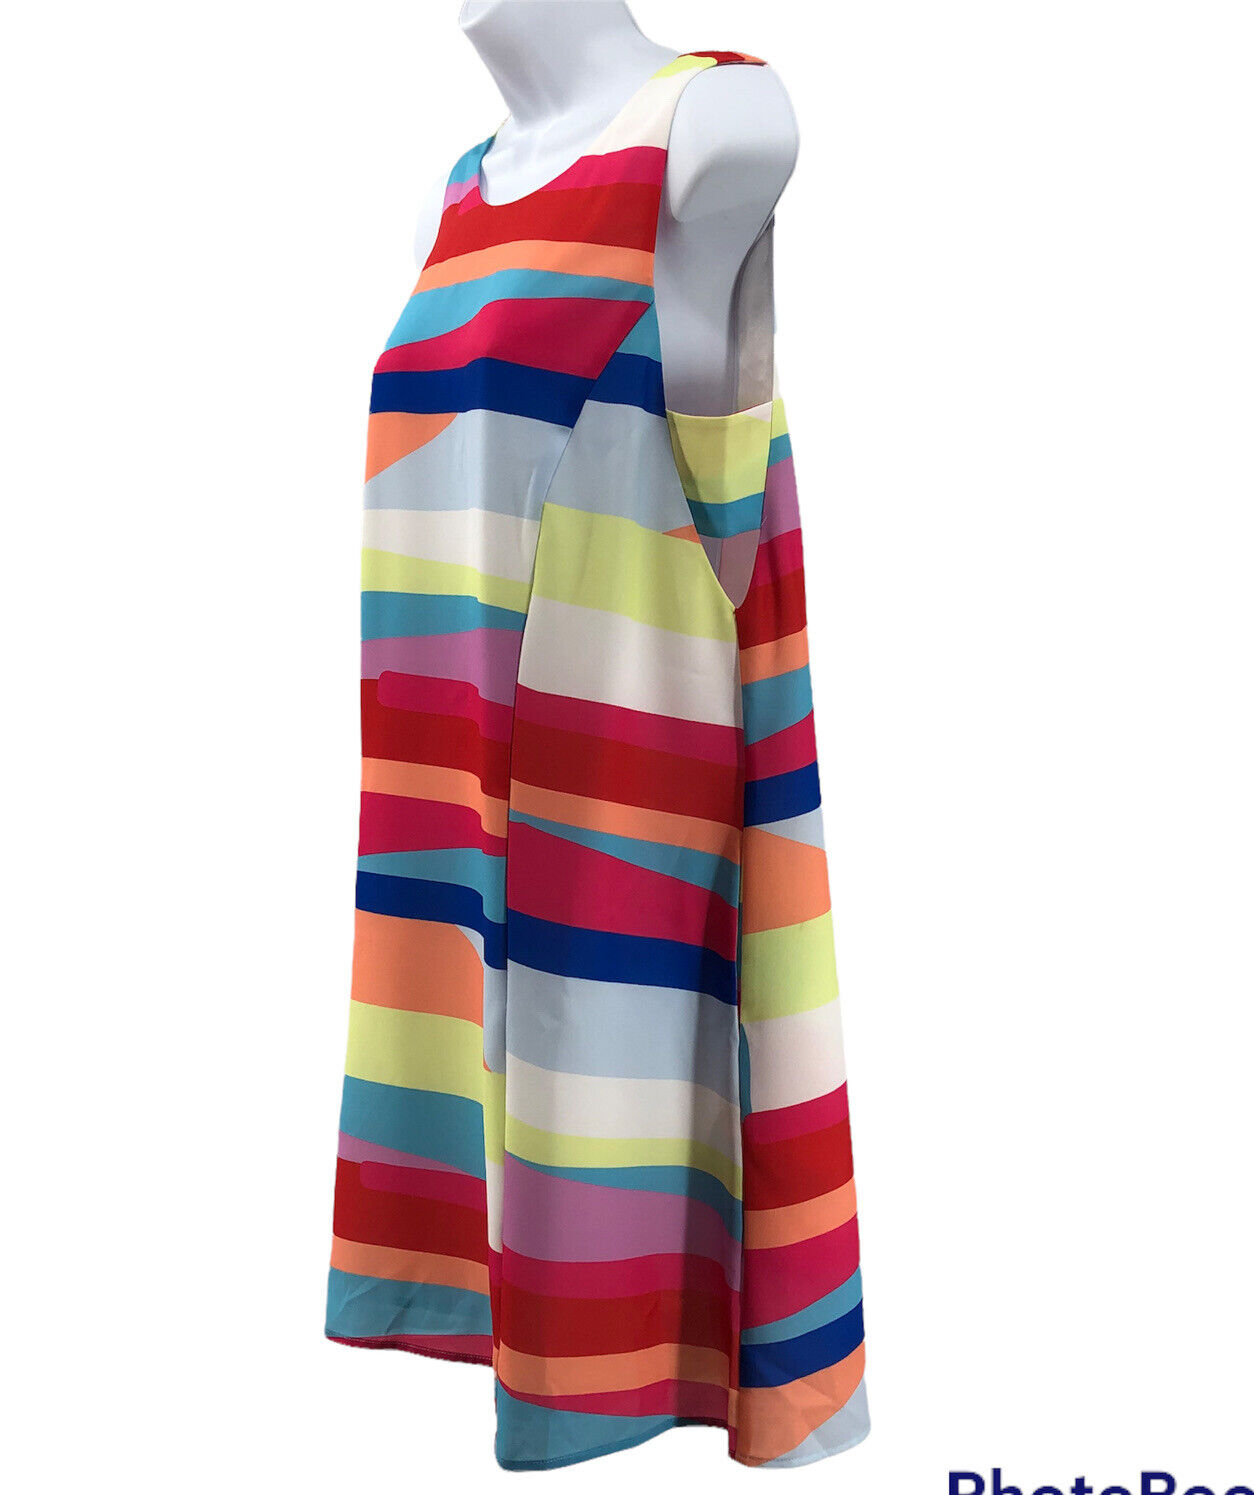 Crosby by Mollie Burch Mod Patchwork Stripe Cutout Silk Dress Sz M | eBay